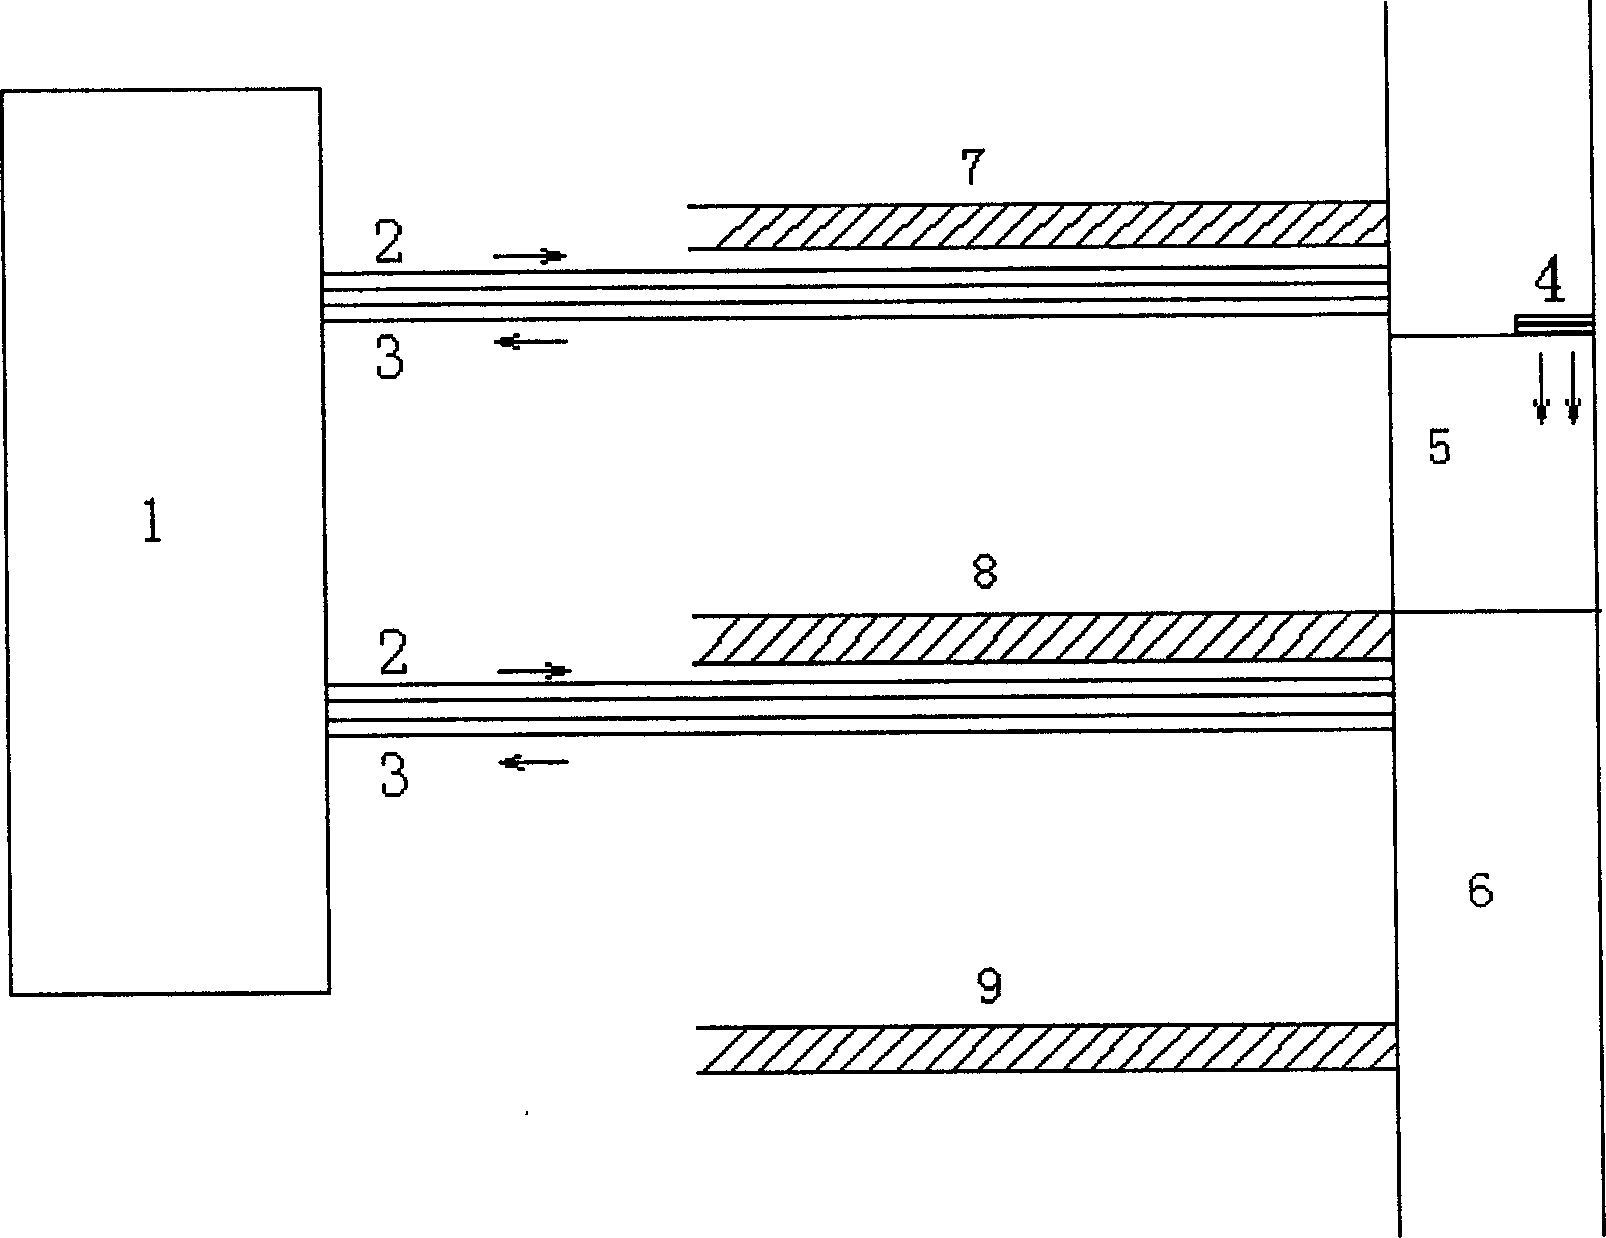 Externally arranged unit blasting air type elevator air conditioning system